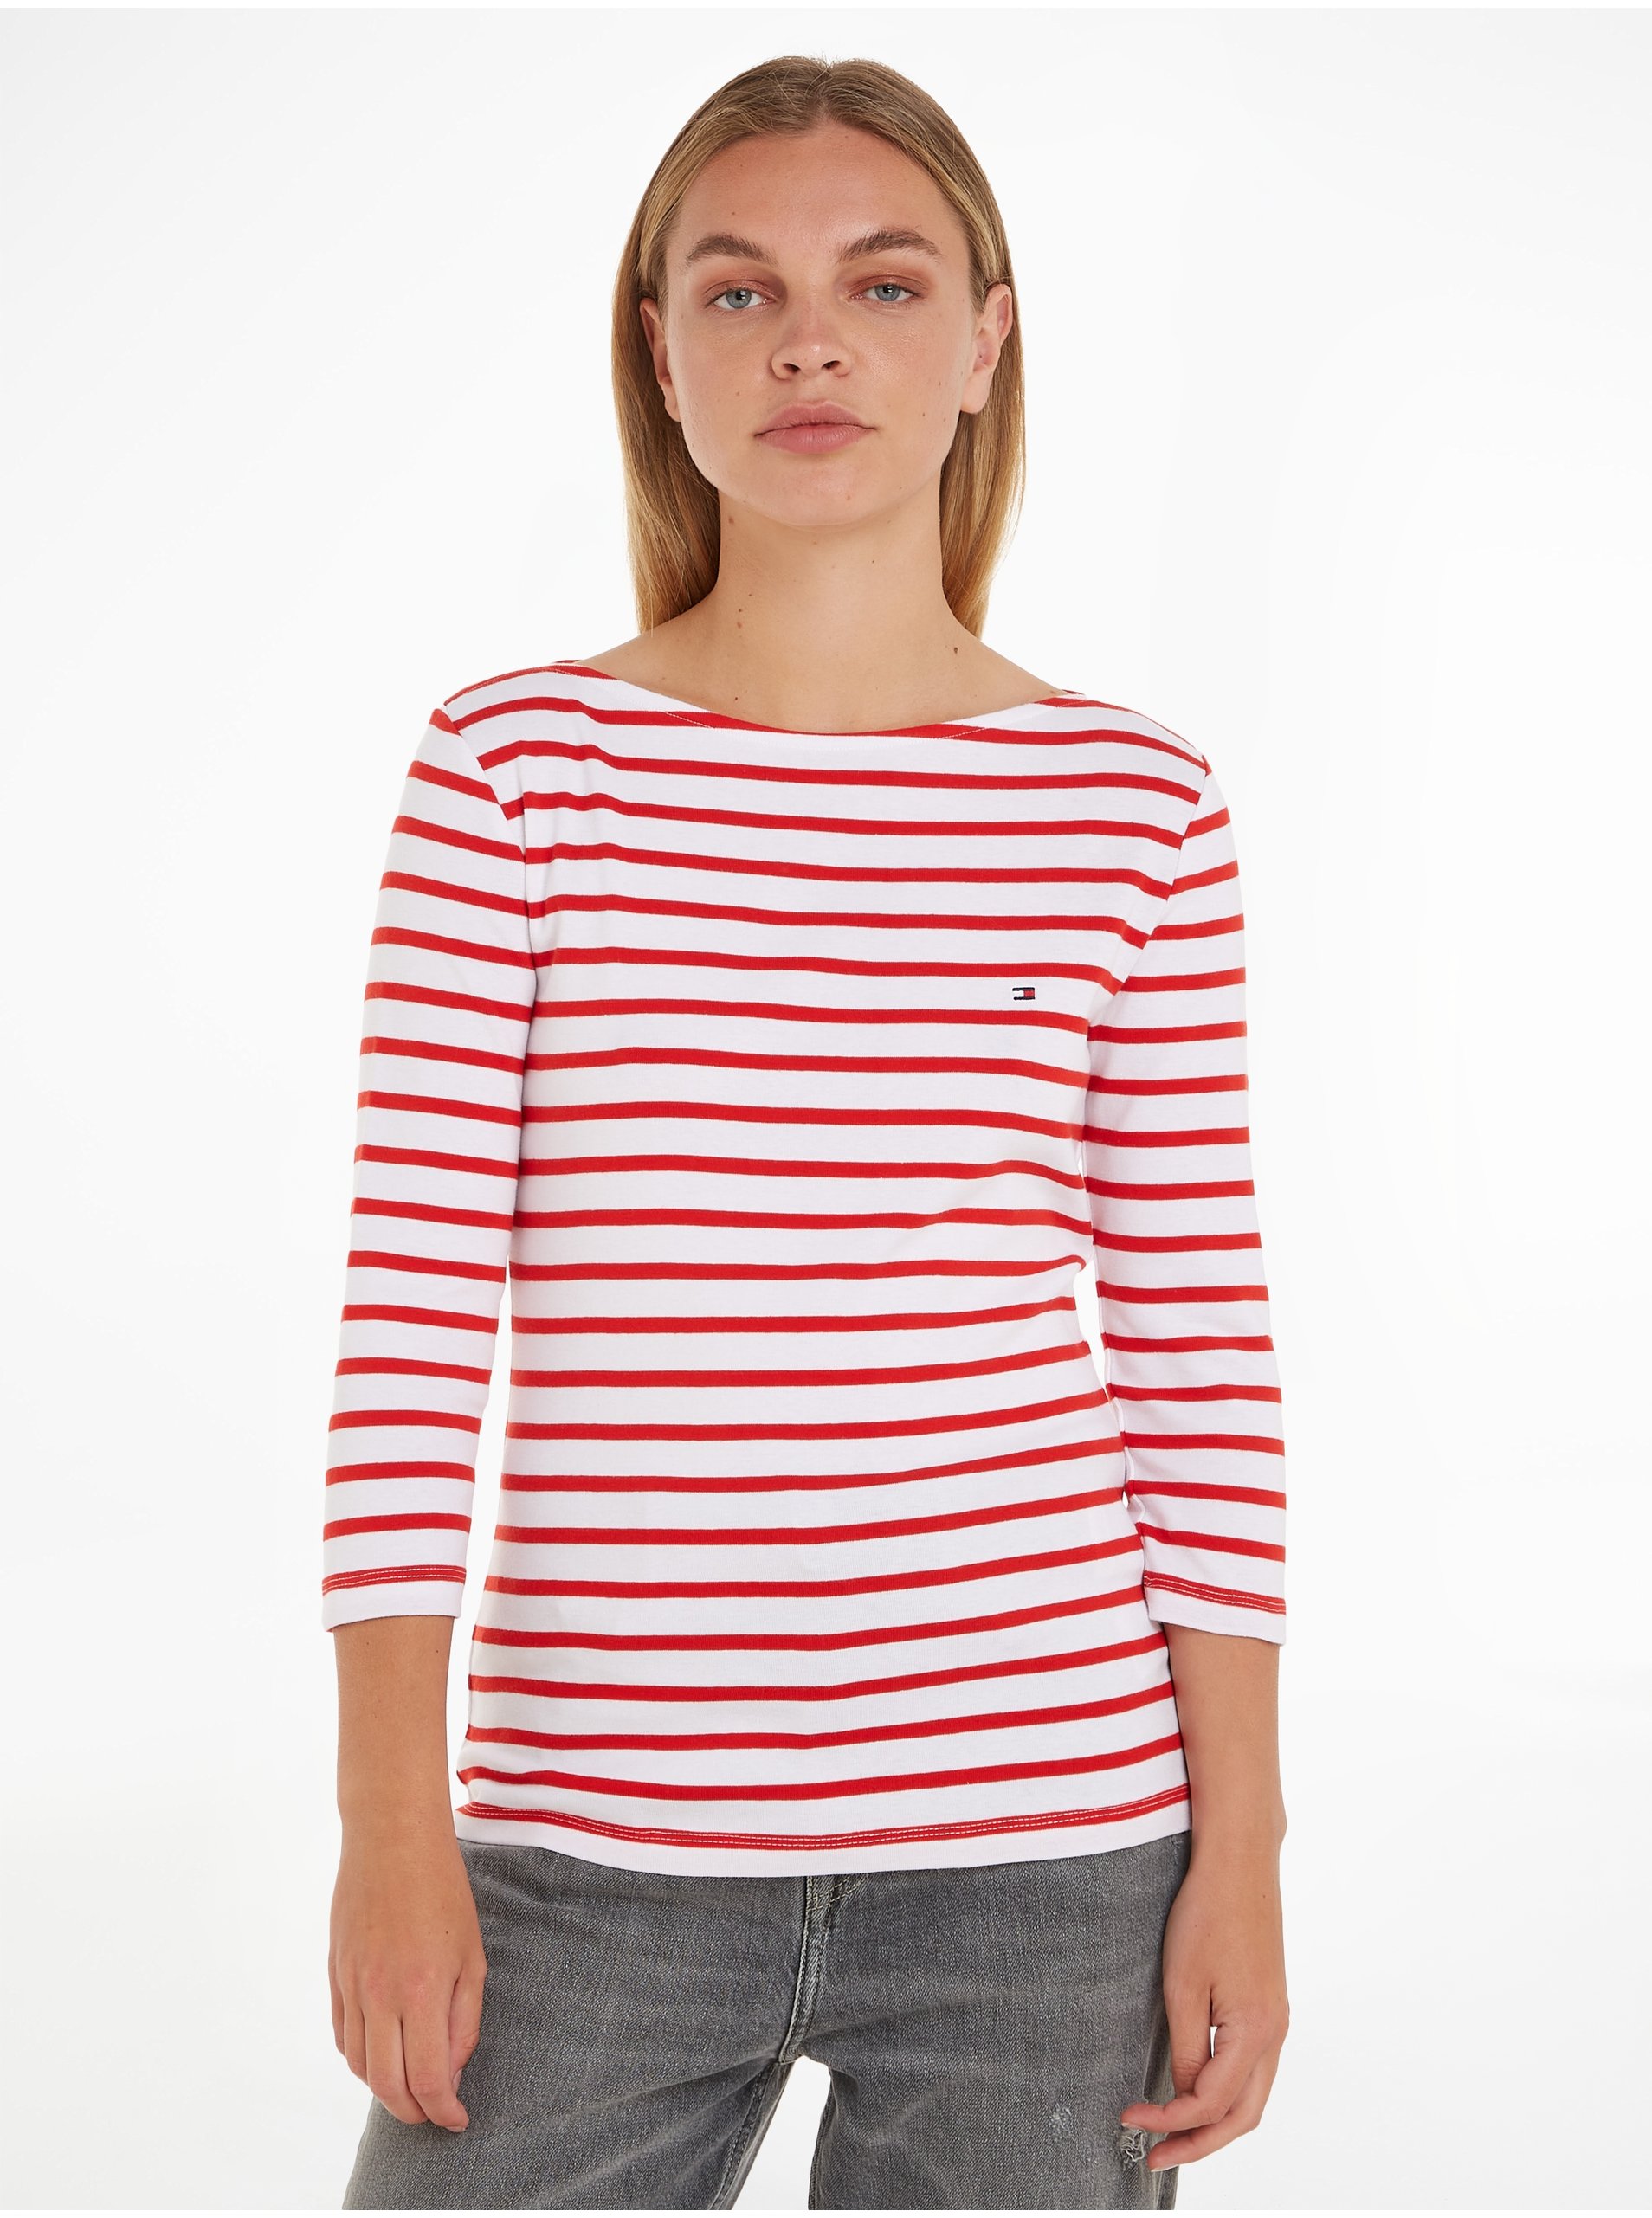 E-shop Bielo-červené dámske pruhované tričko s dlhým rukávom Tommy Hilfiger